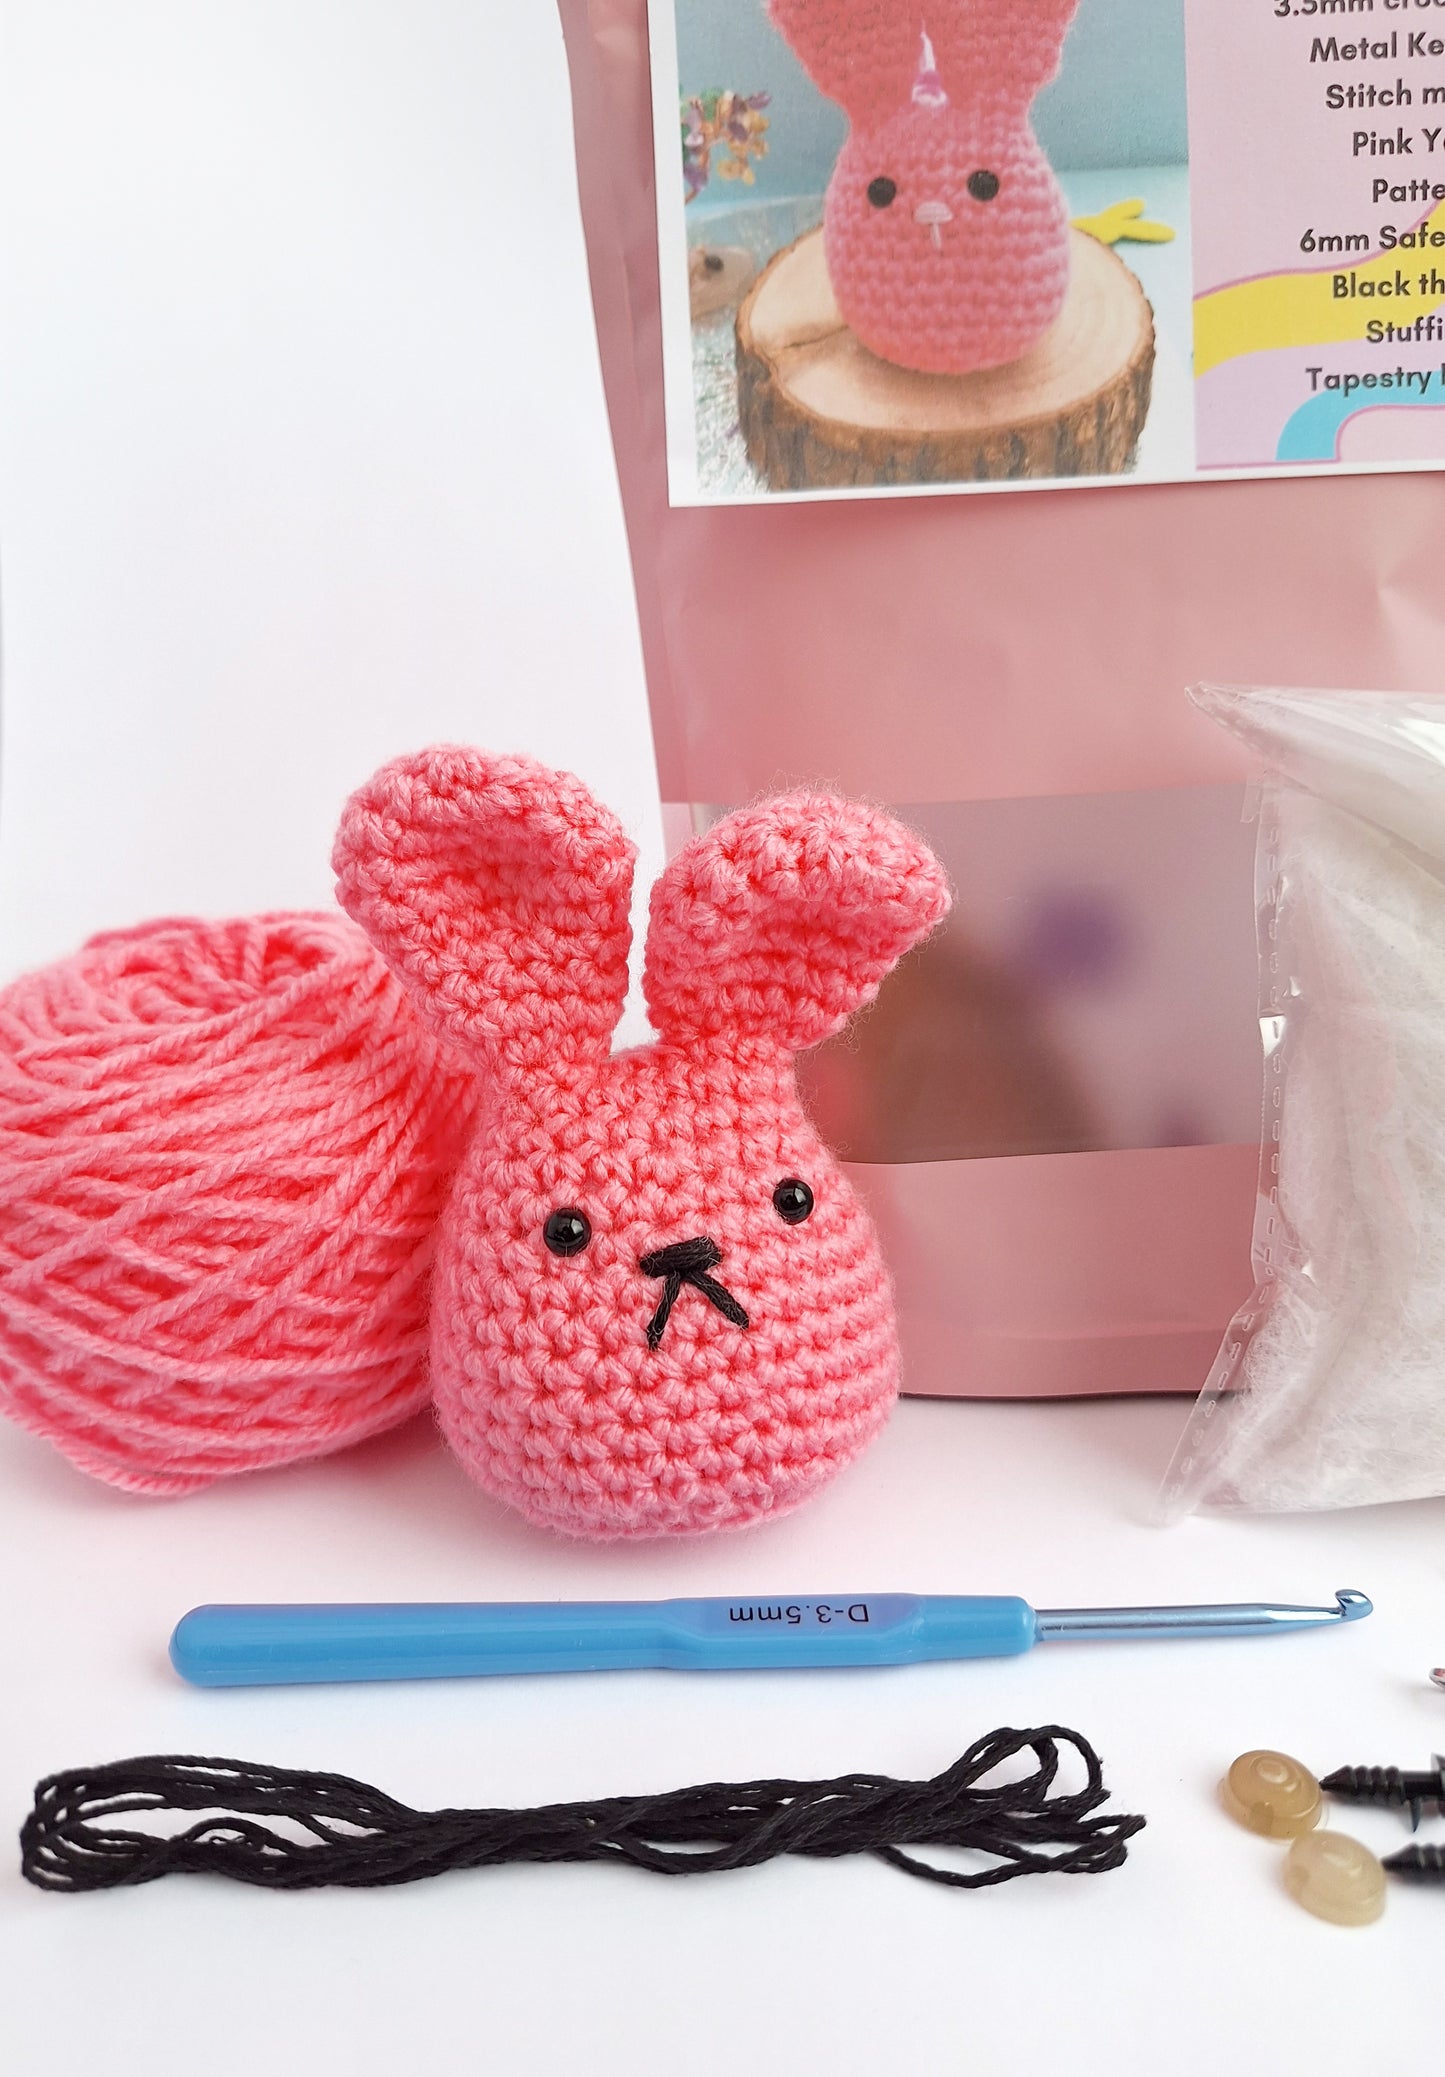 bunny toy beginner crochet kit - No sew crochet craft kit